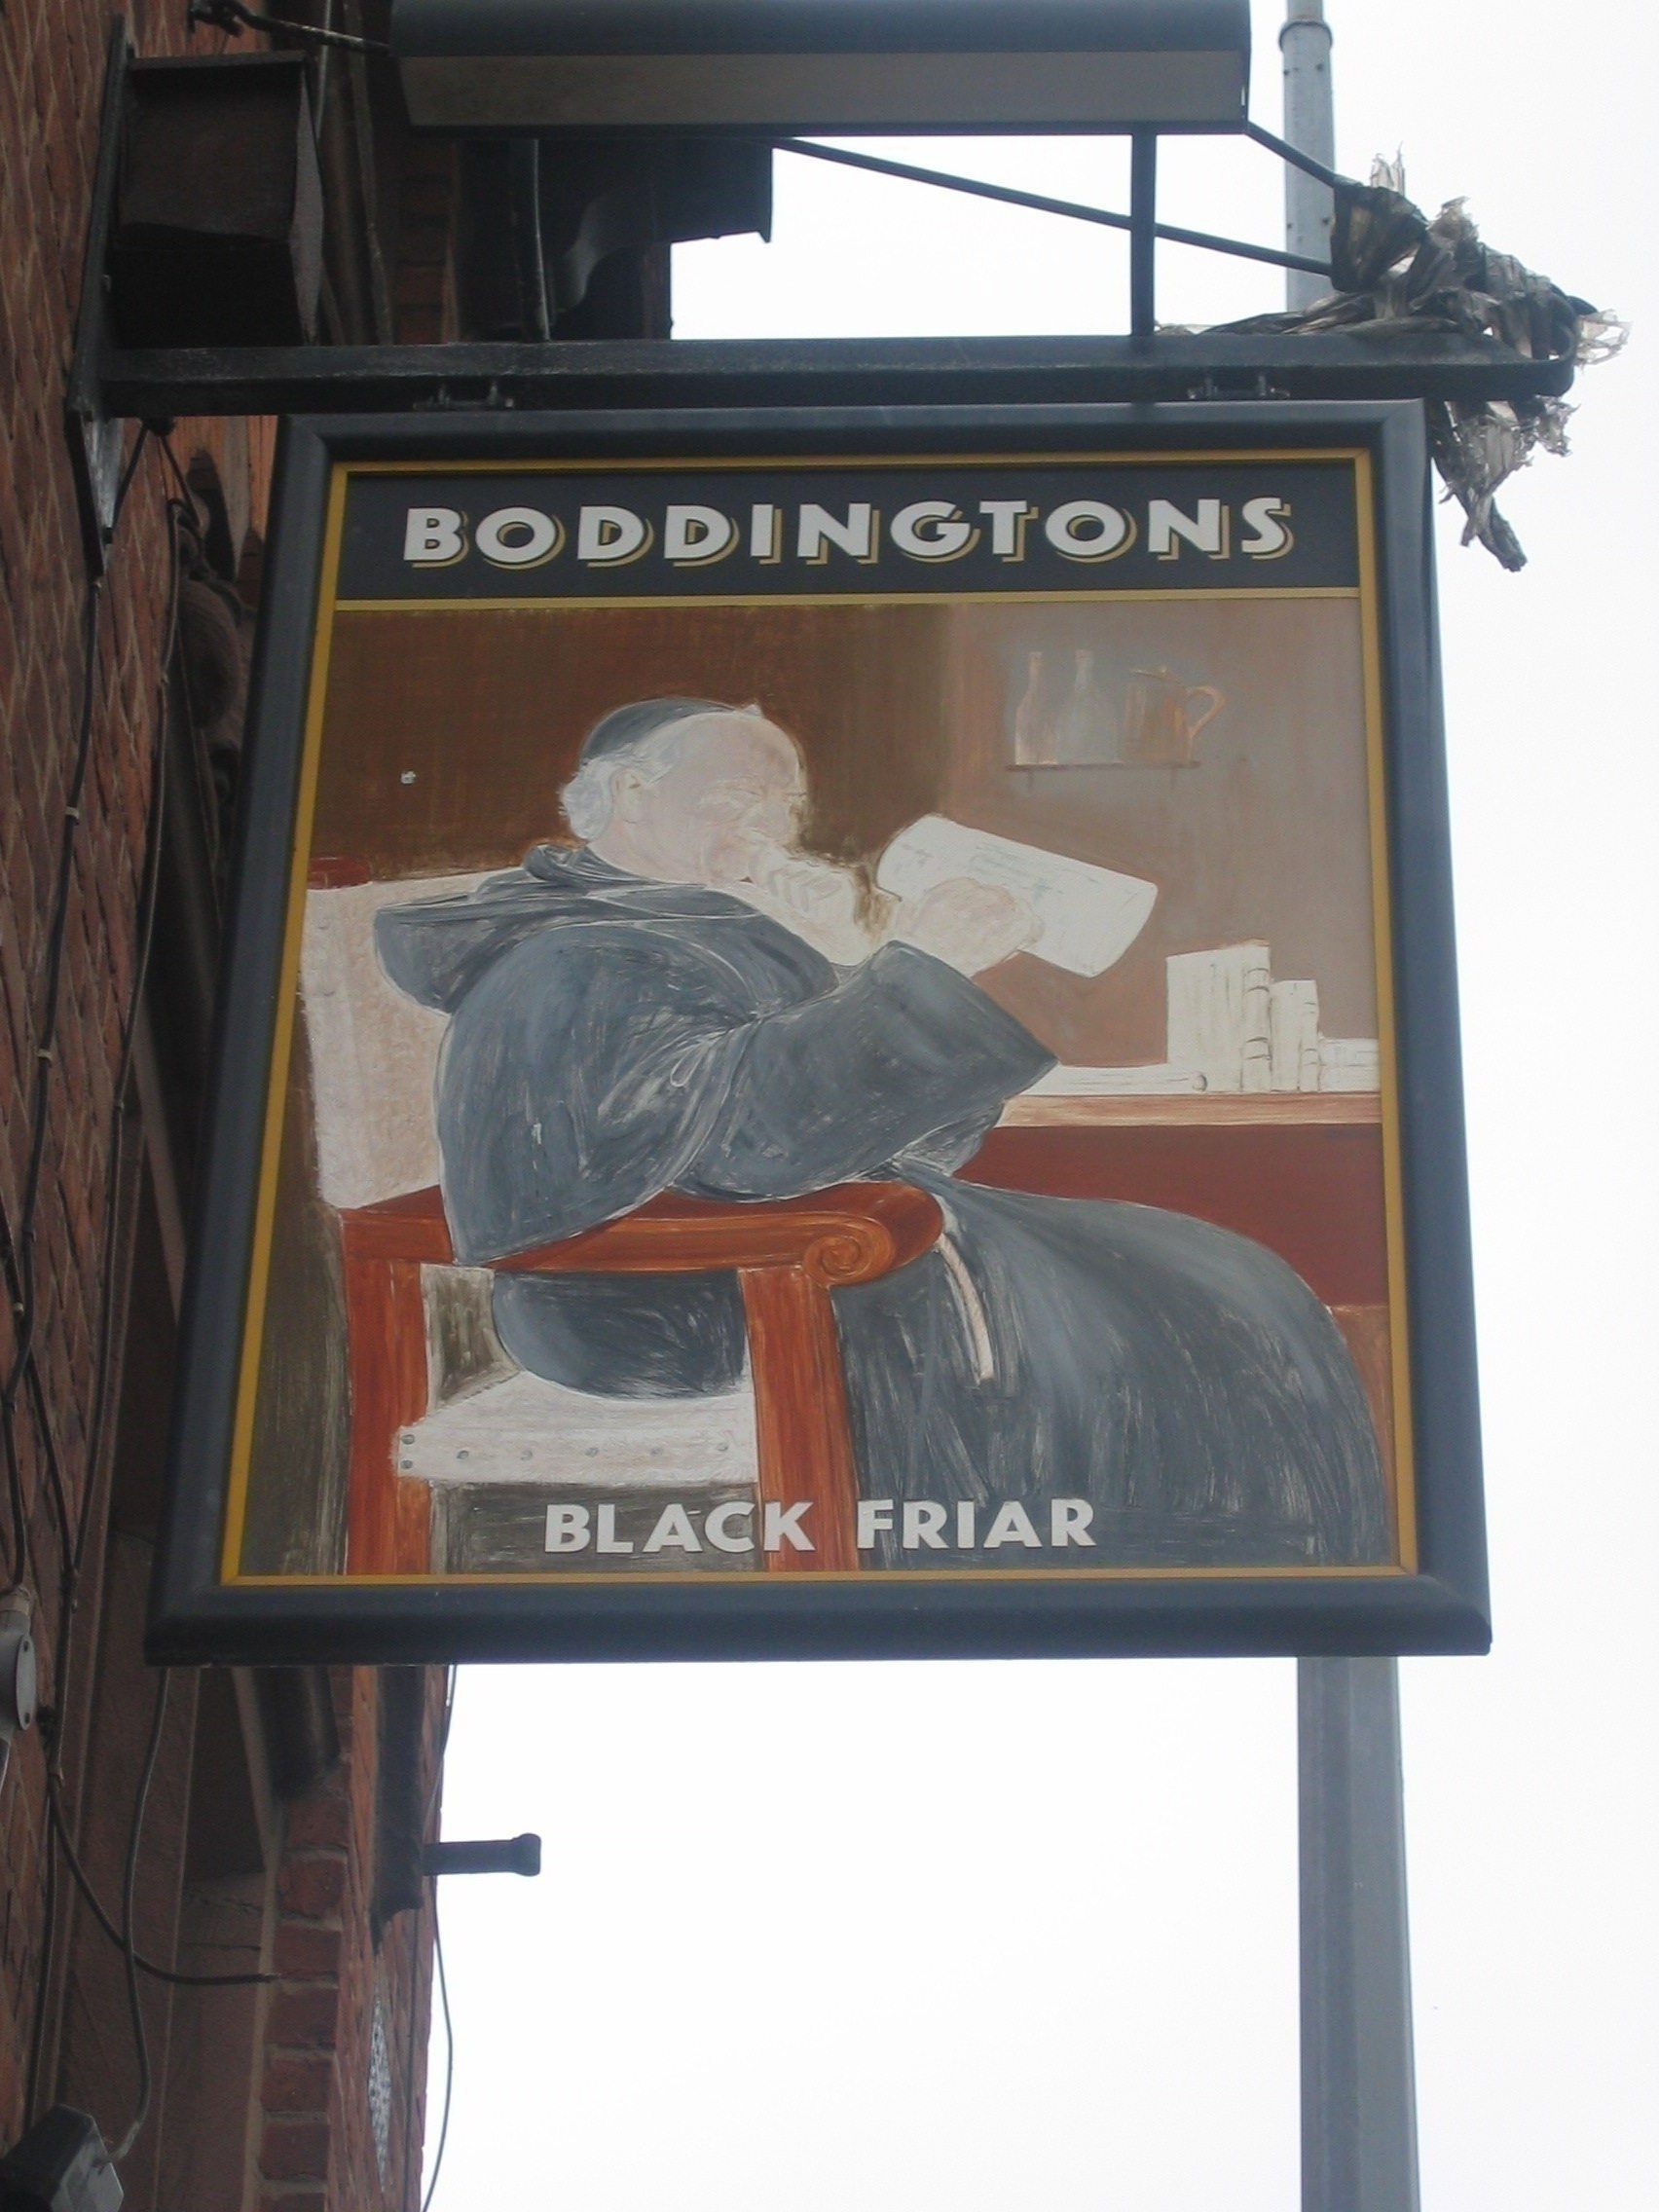 Photo taken by me - The Black Friar pub sign, Salford